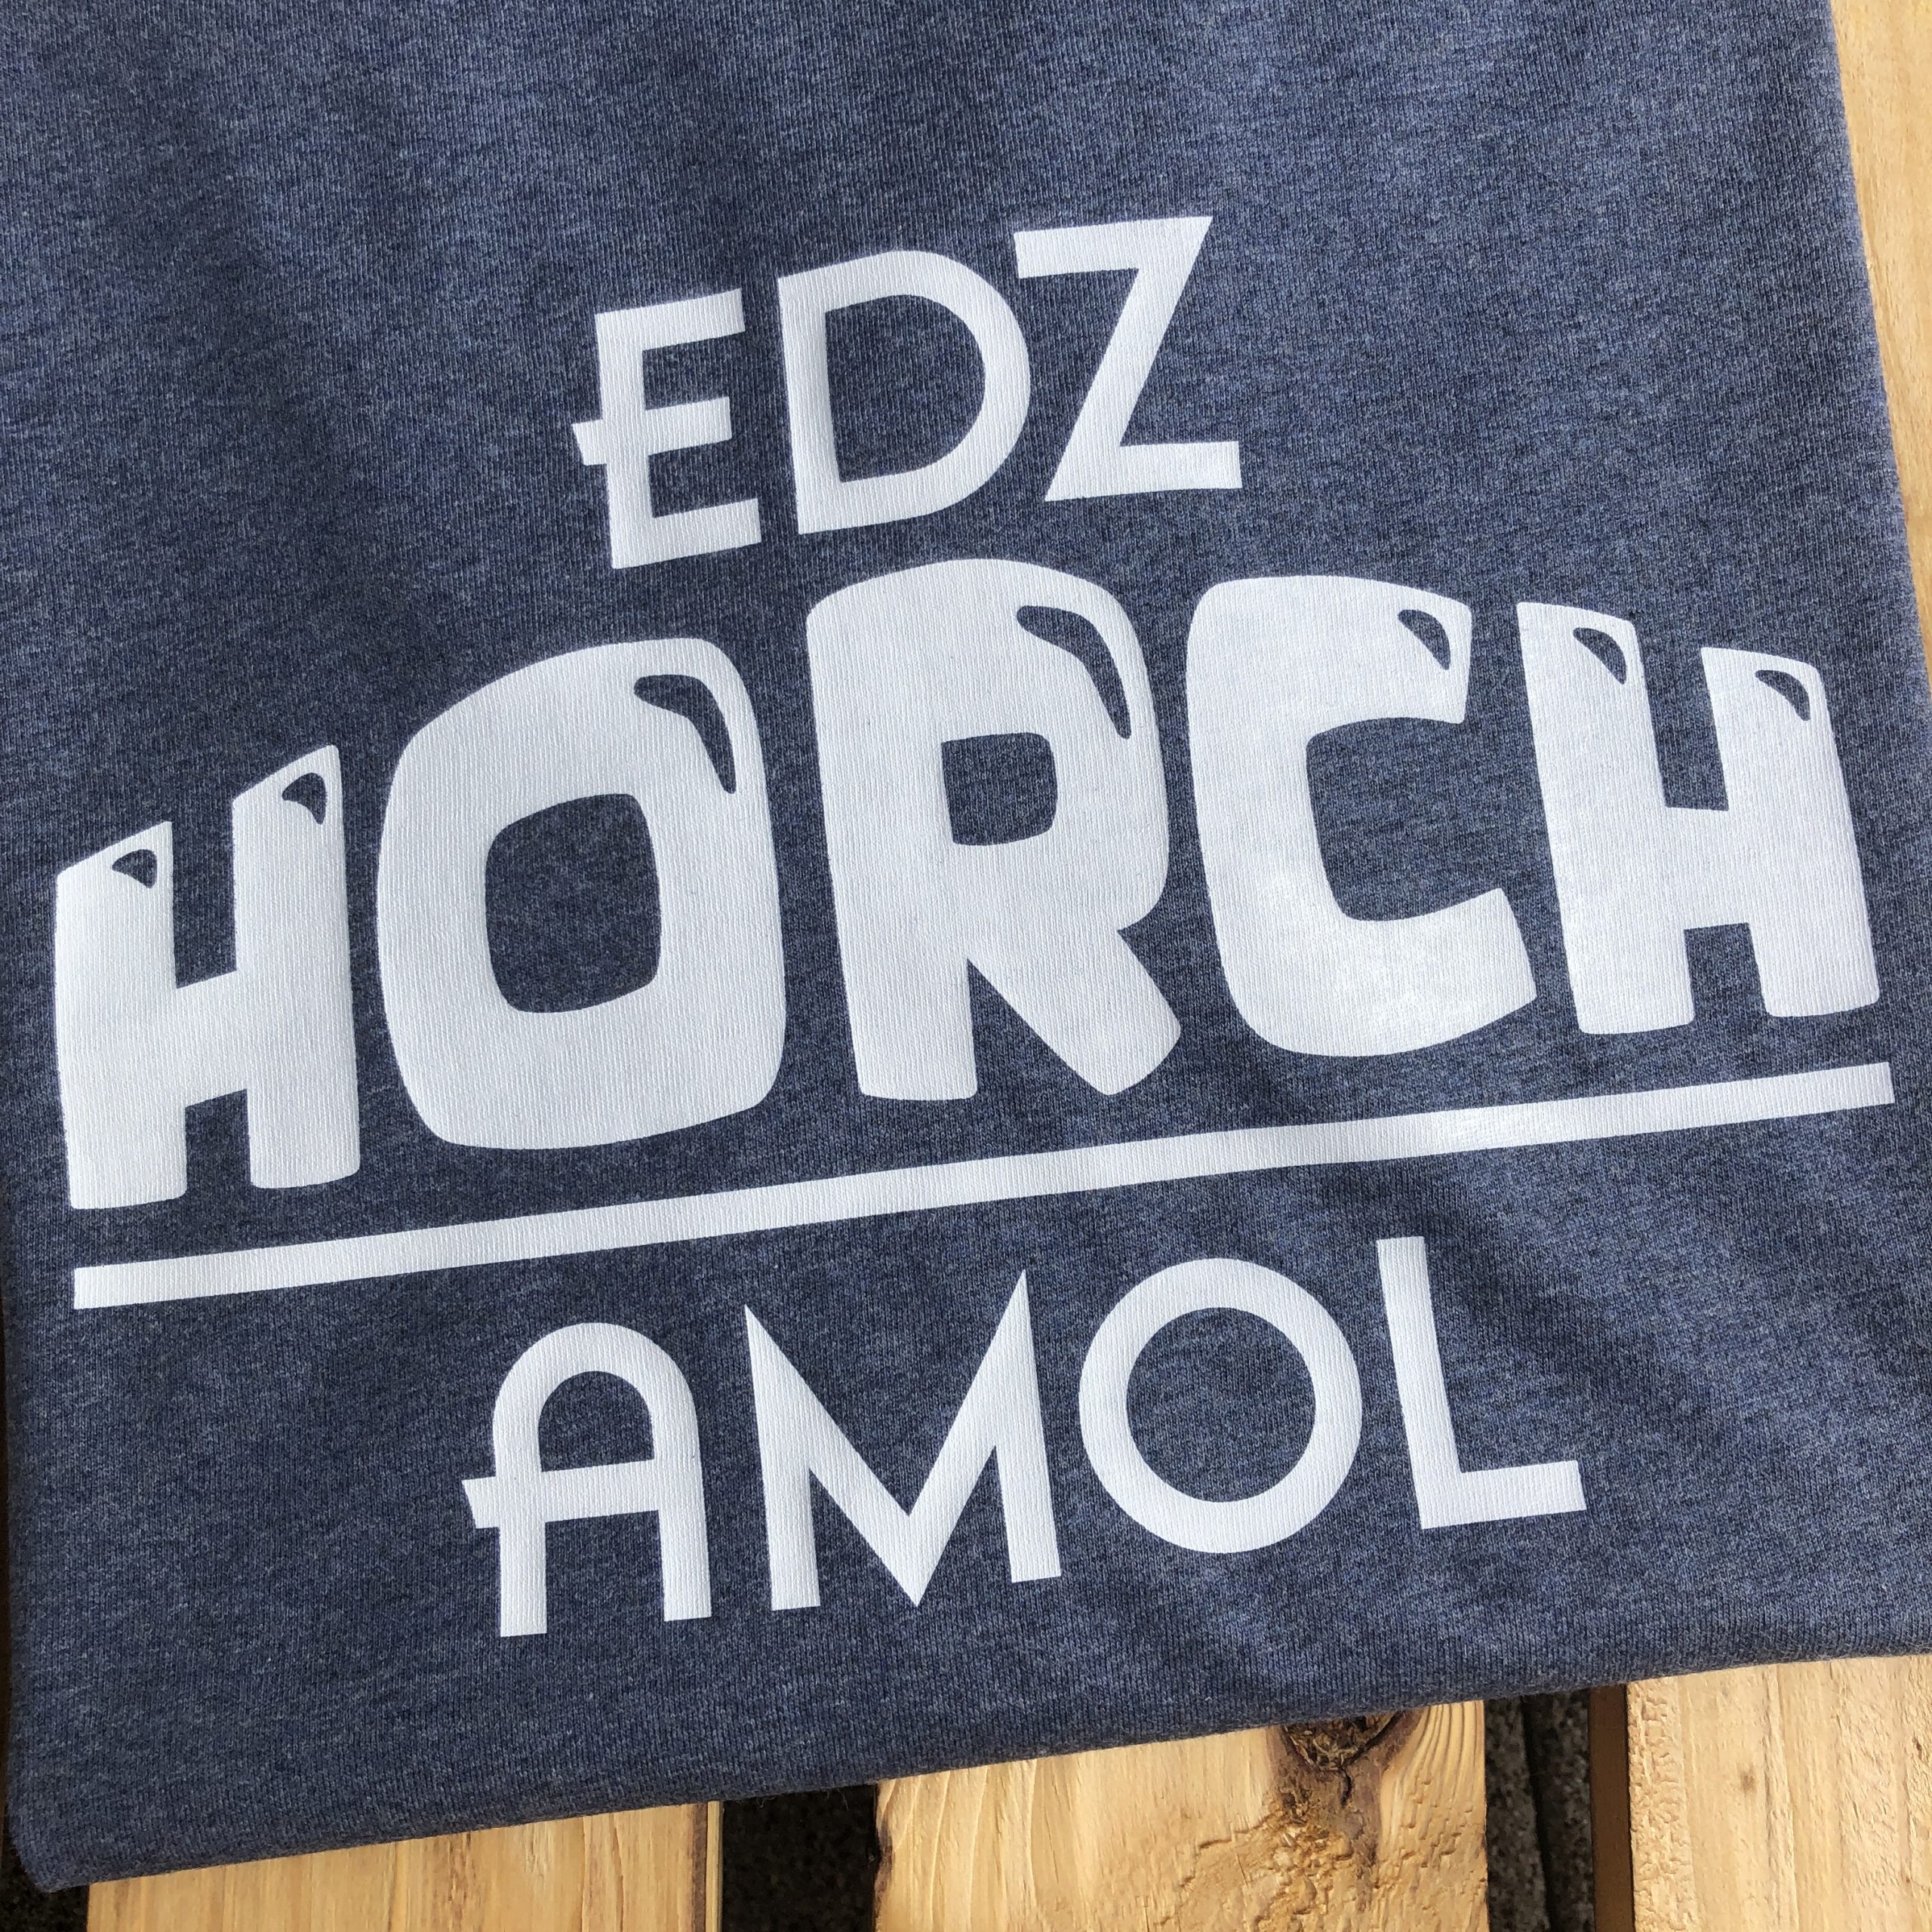 Edz horch amol T-Shirt Frankenstyle Fränkische T-Shirt Mode Shop Nürnberg